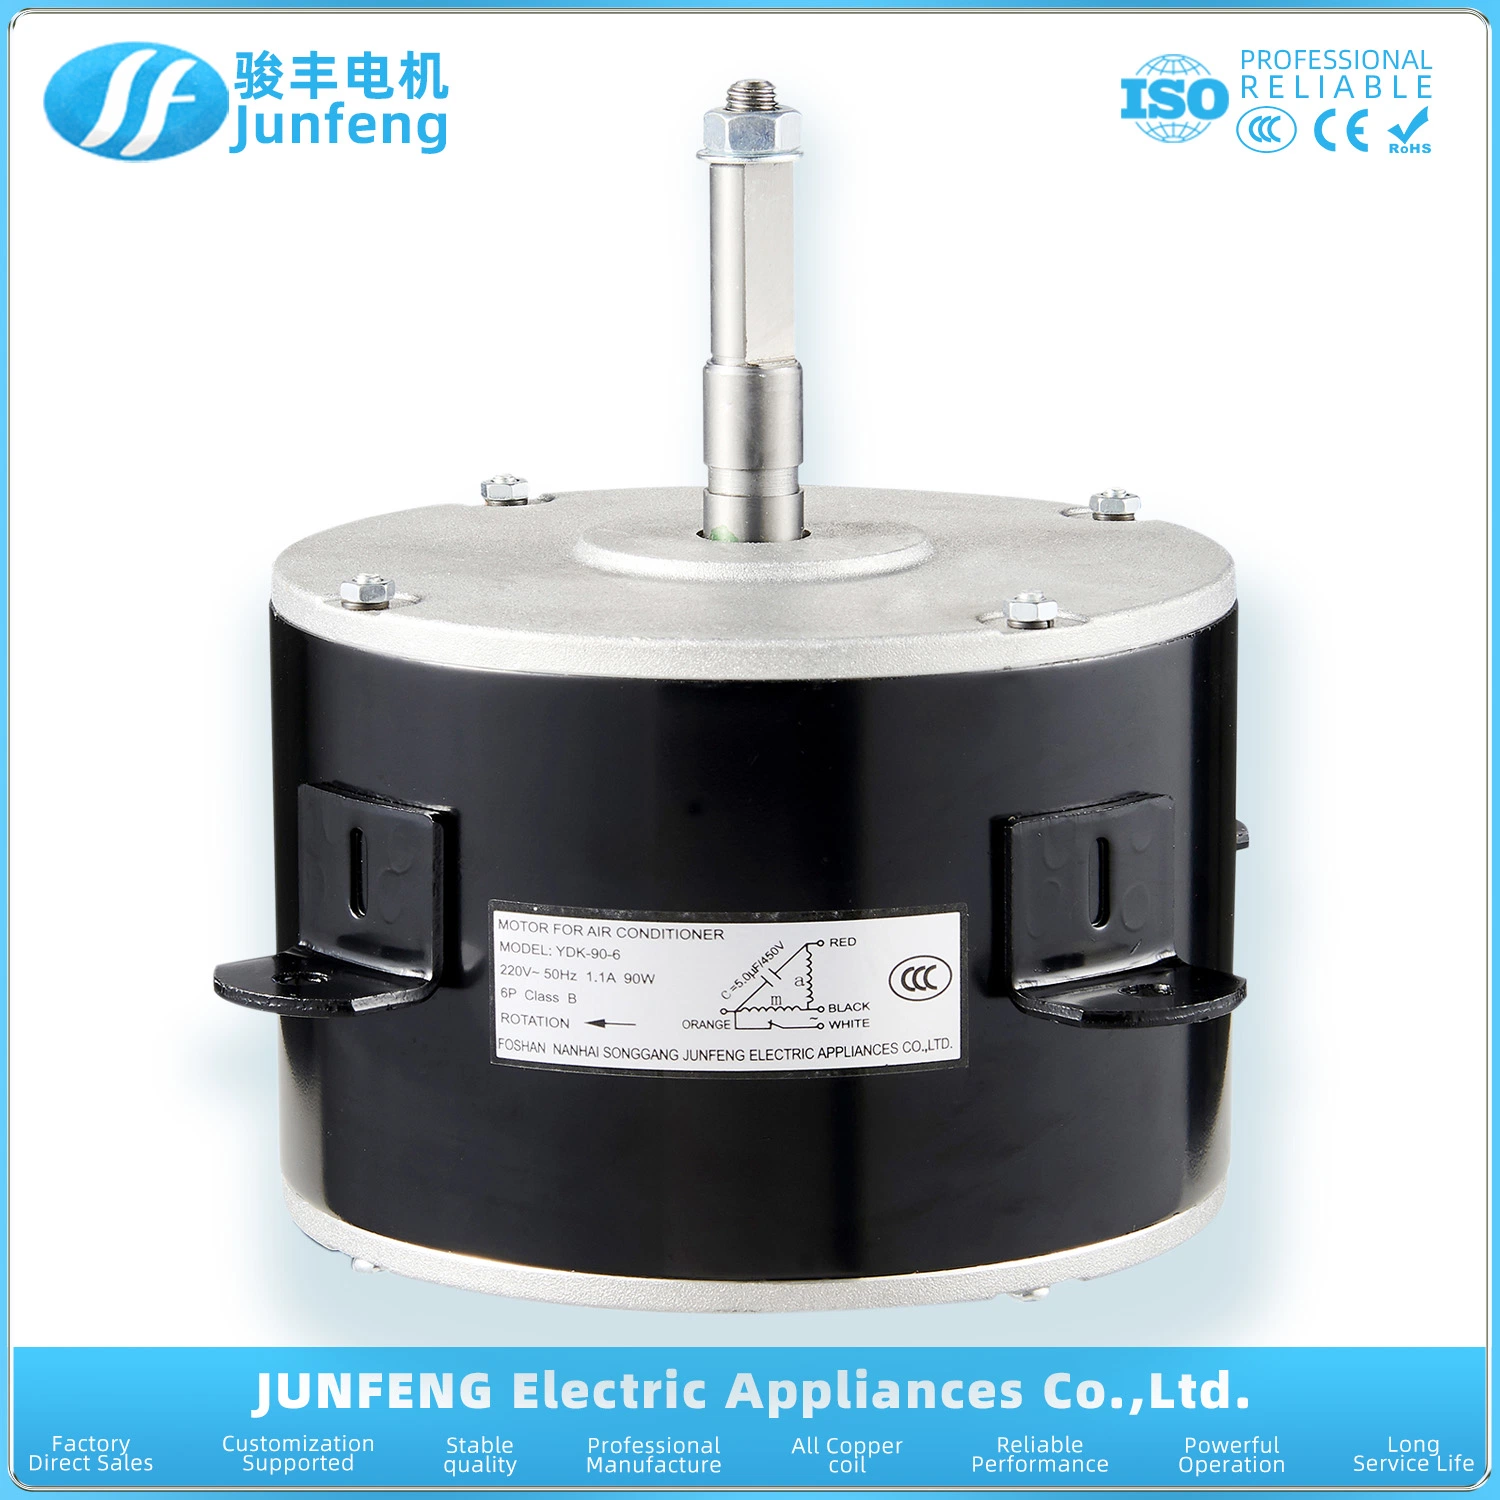 Junfeng Ydk-90-6 Electrical Cooler Motor Air Conditioner Condenser Fan Motors 001